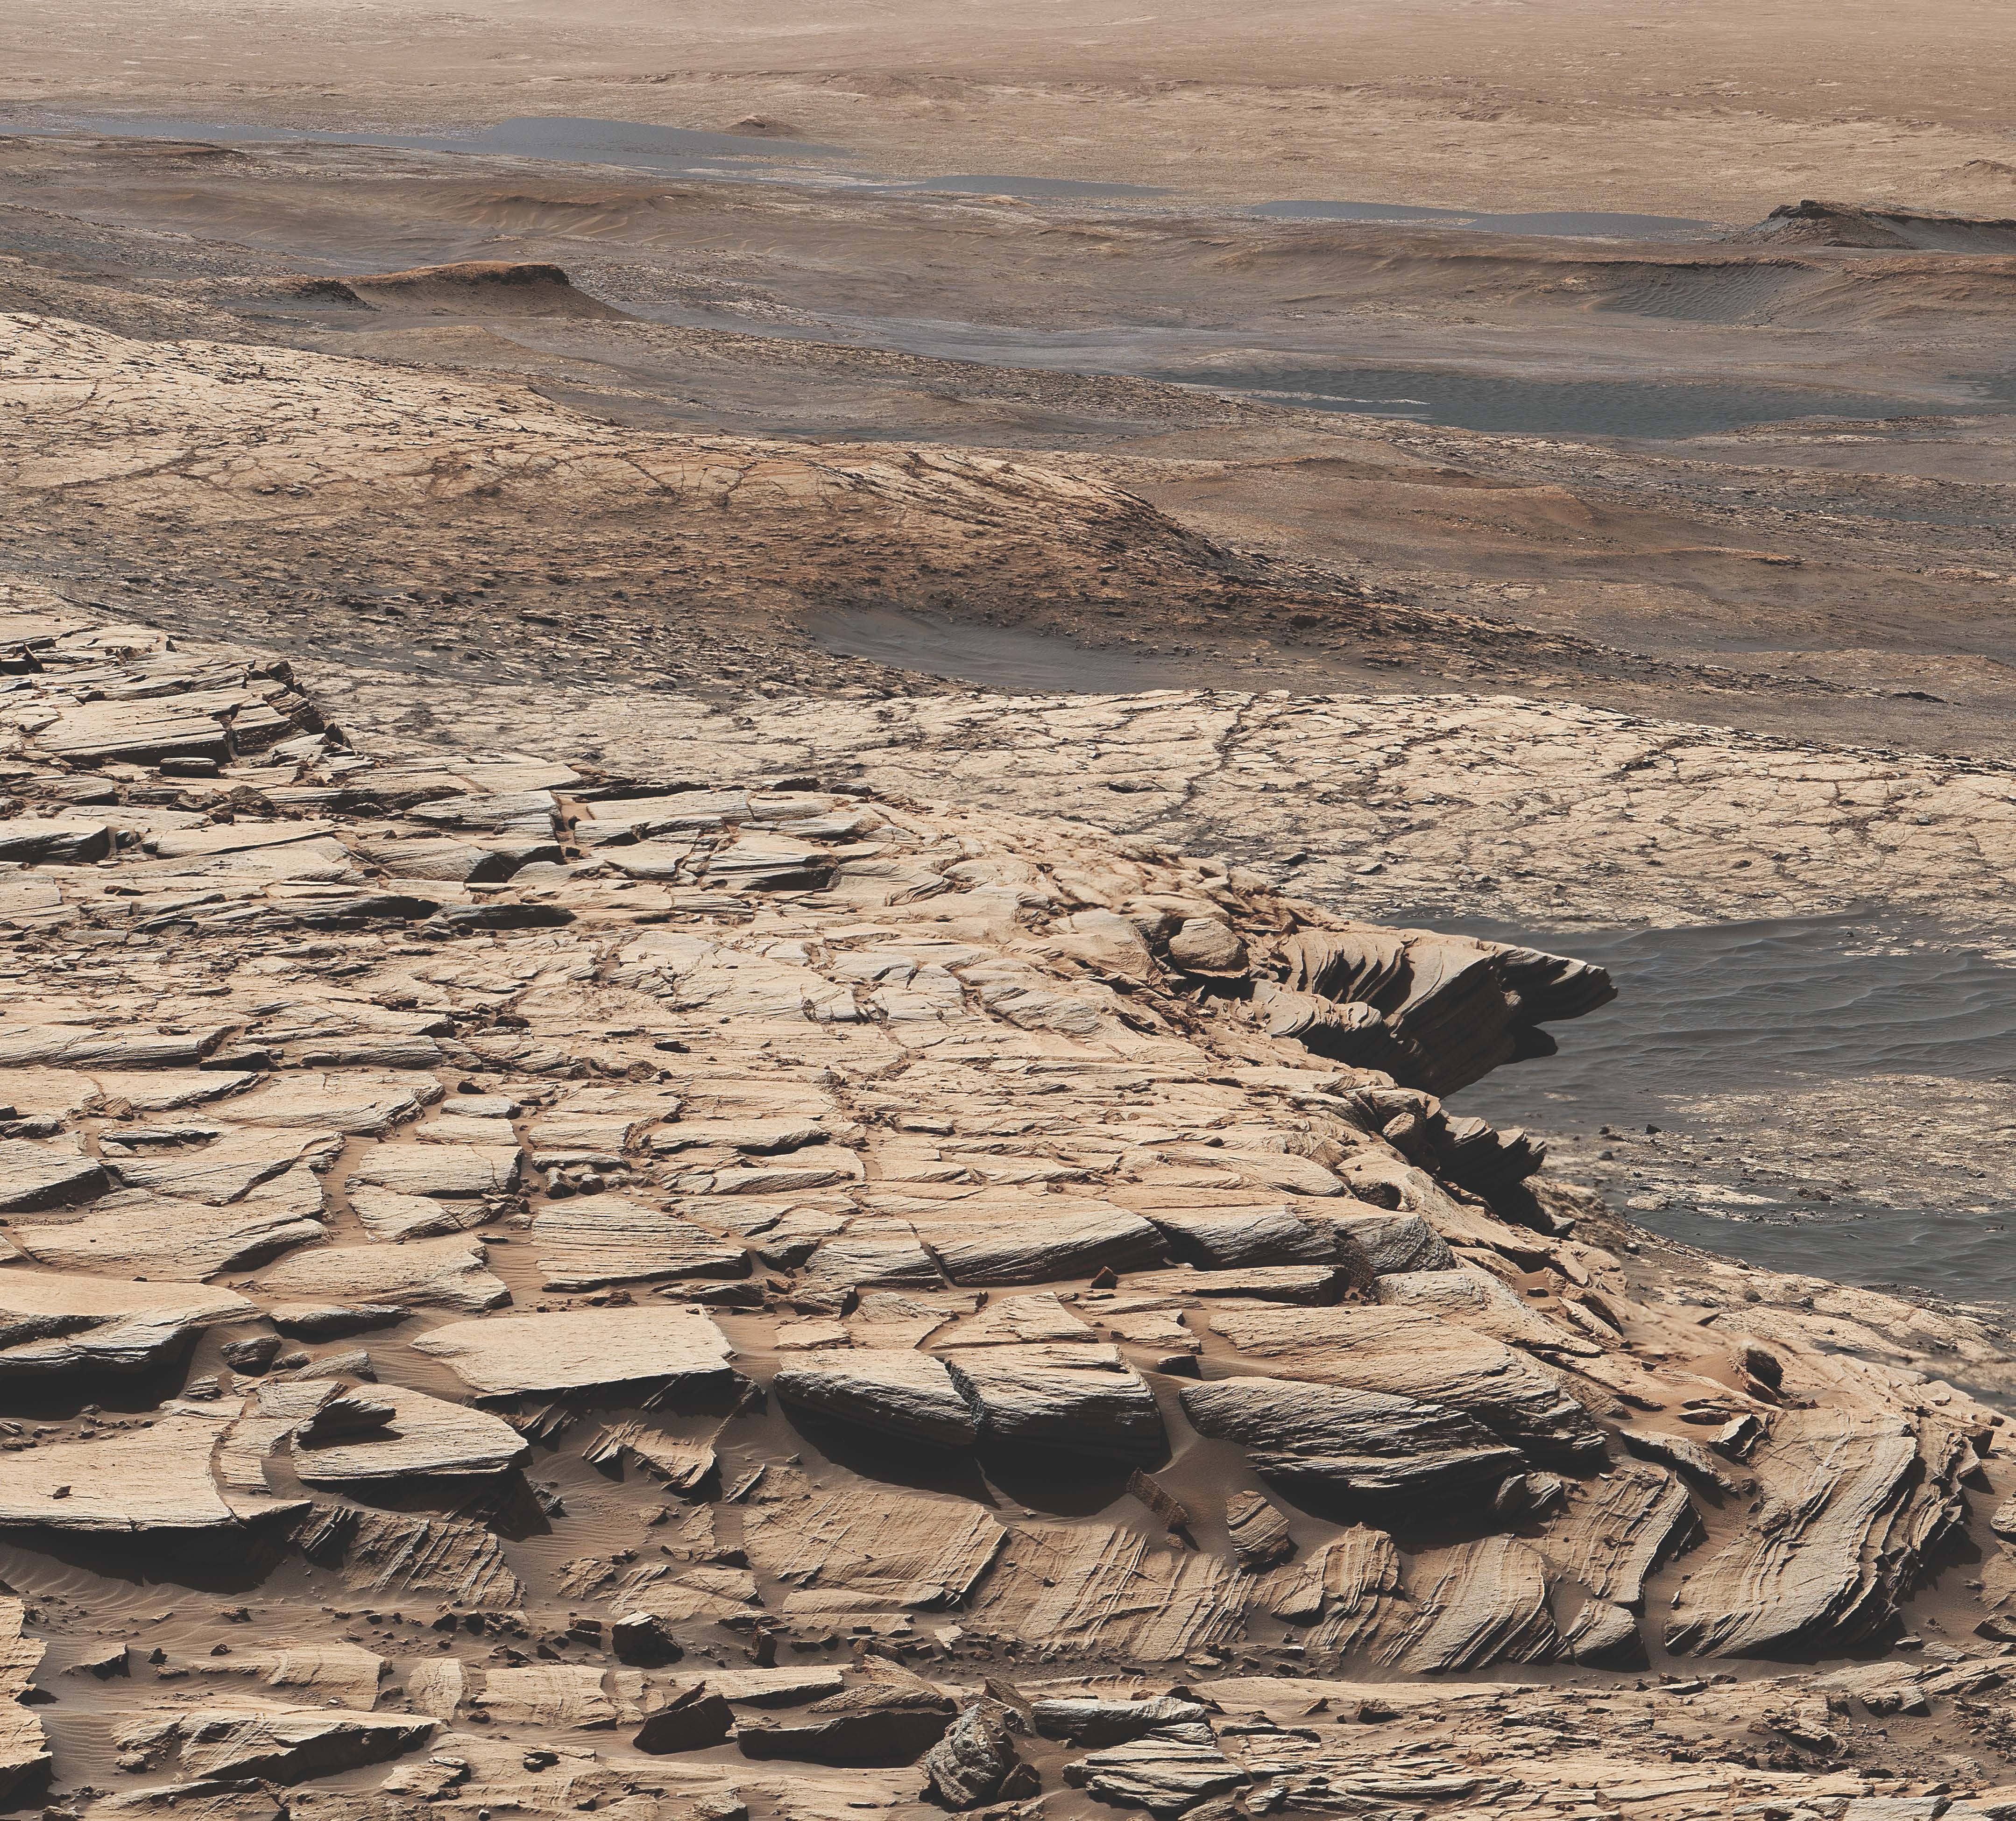 Mosaik ini dibuat dari gambar yang diambil oleh kamera MAST di atas pesawat ruang angkasa Curiosity NASA pada Hari Mars 2729, atau hari pertama misi.  Lanskap menunjukkan formasi batupasir Stimson di Kawah Gale.  Di situs umum ini, Curiosity mengebor lubang bor Edinburgh, yang sampelnya diperkaya dengan karbon 12.